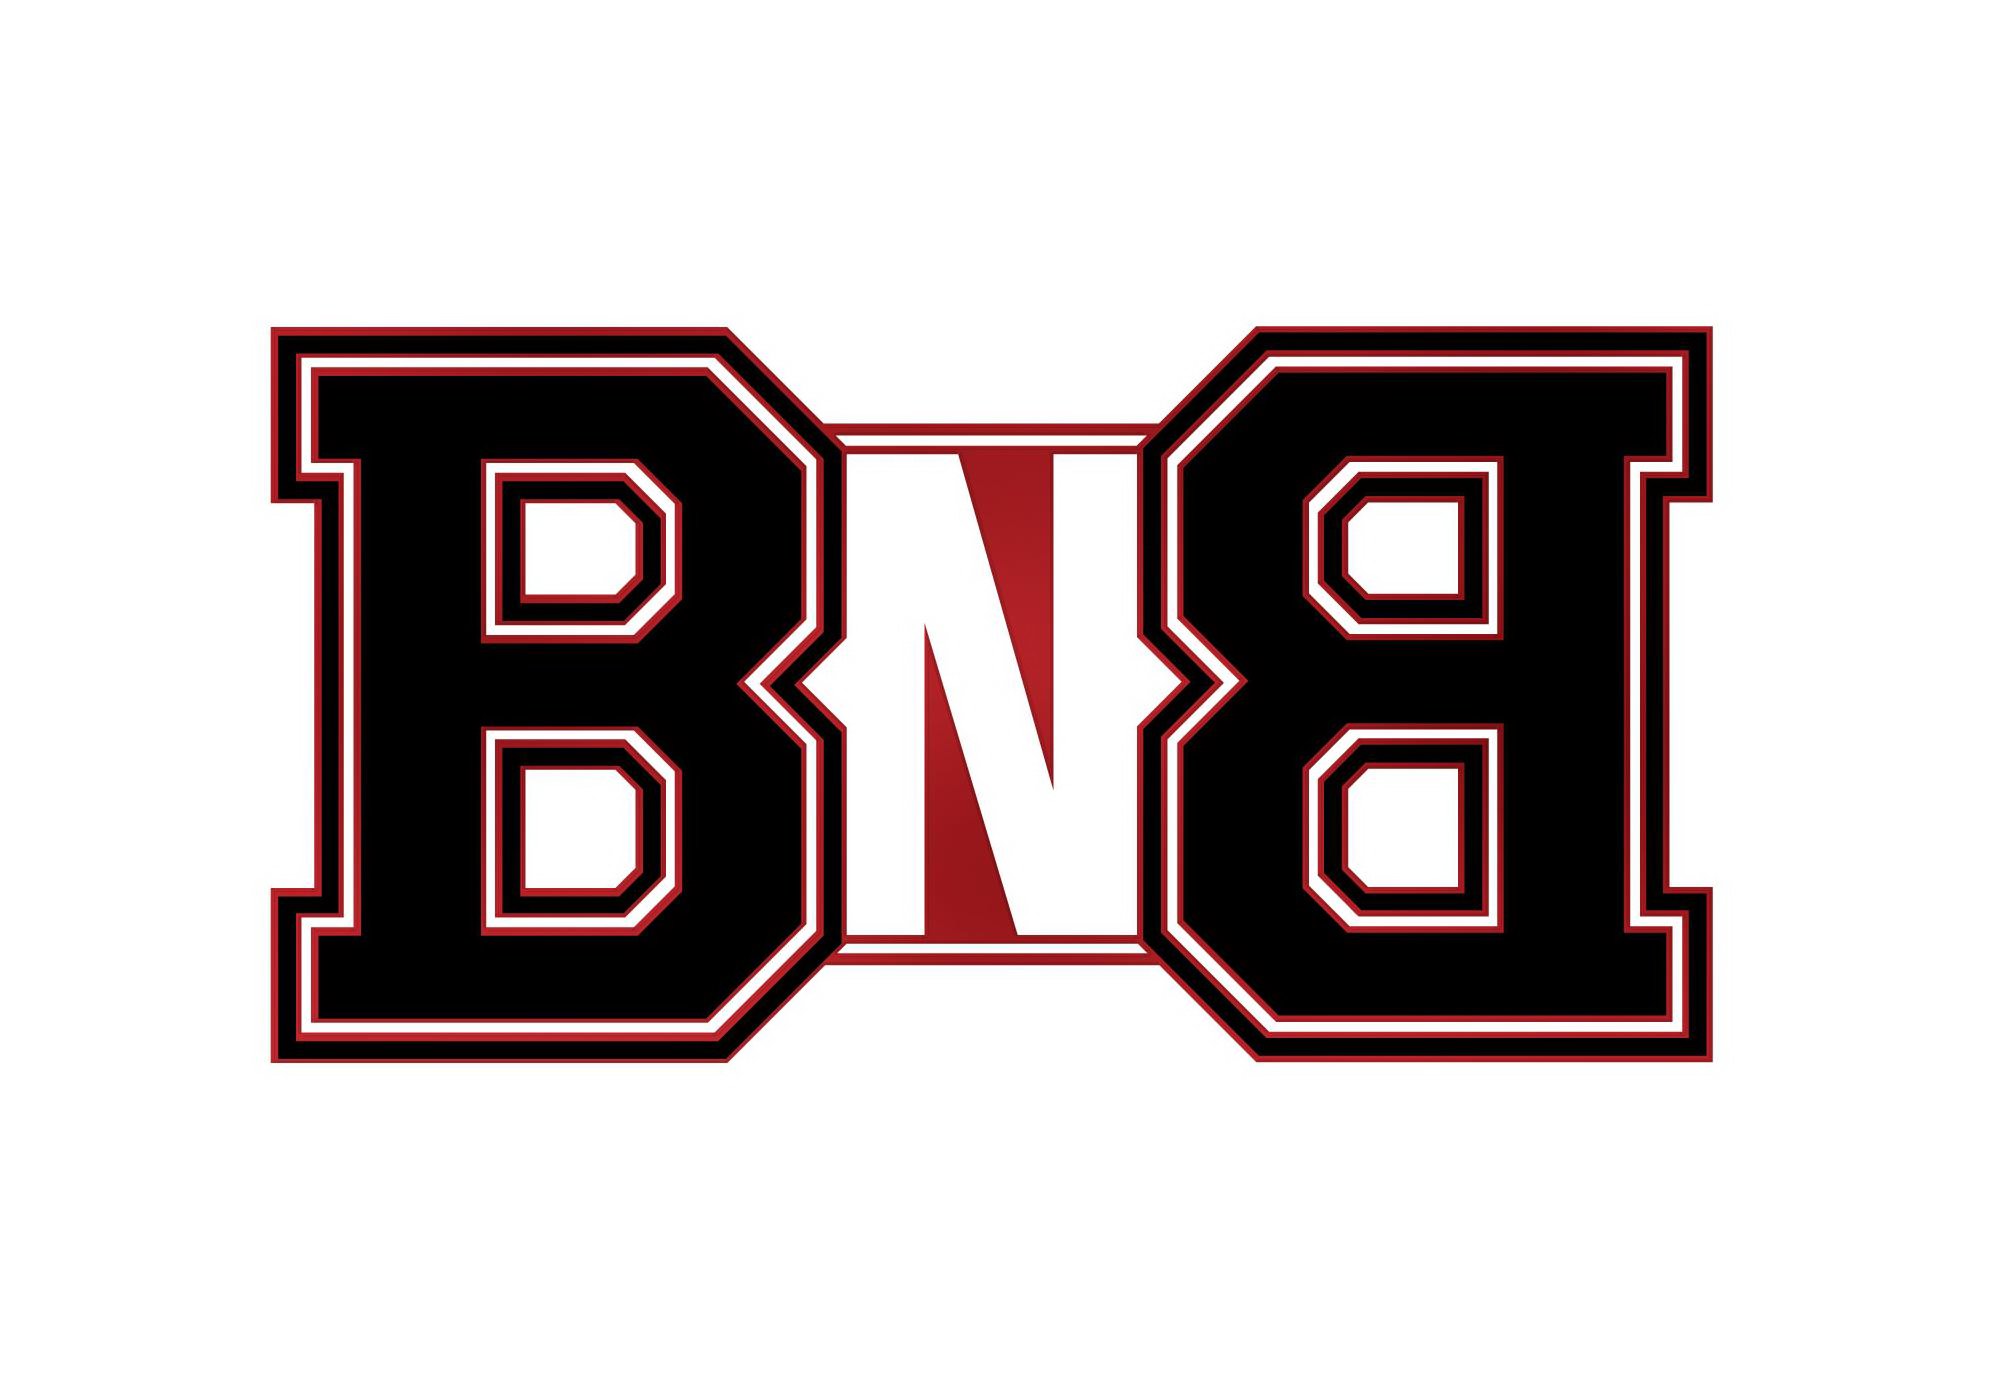 Trademark Logo BNB